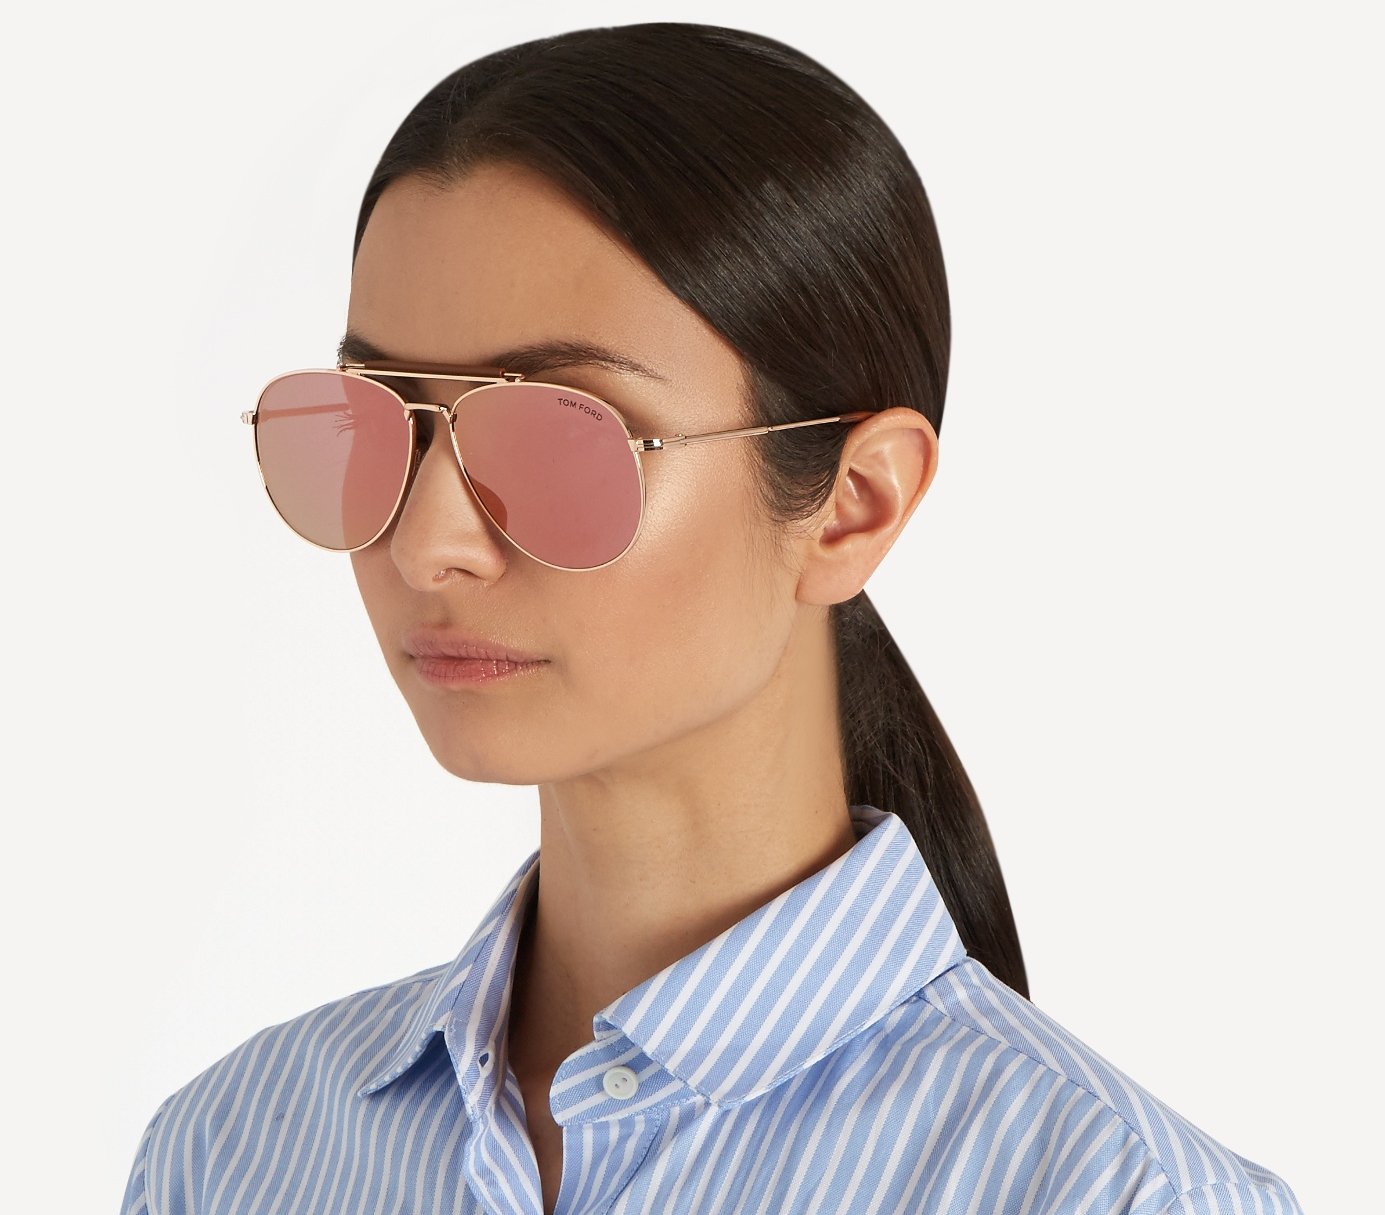 Tom Ford Sunglasses and Eyewear 2016